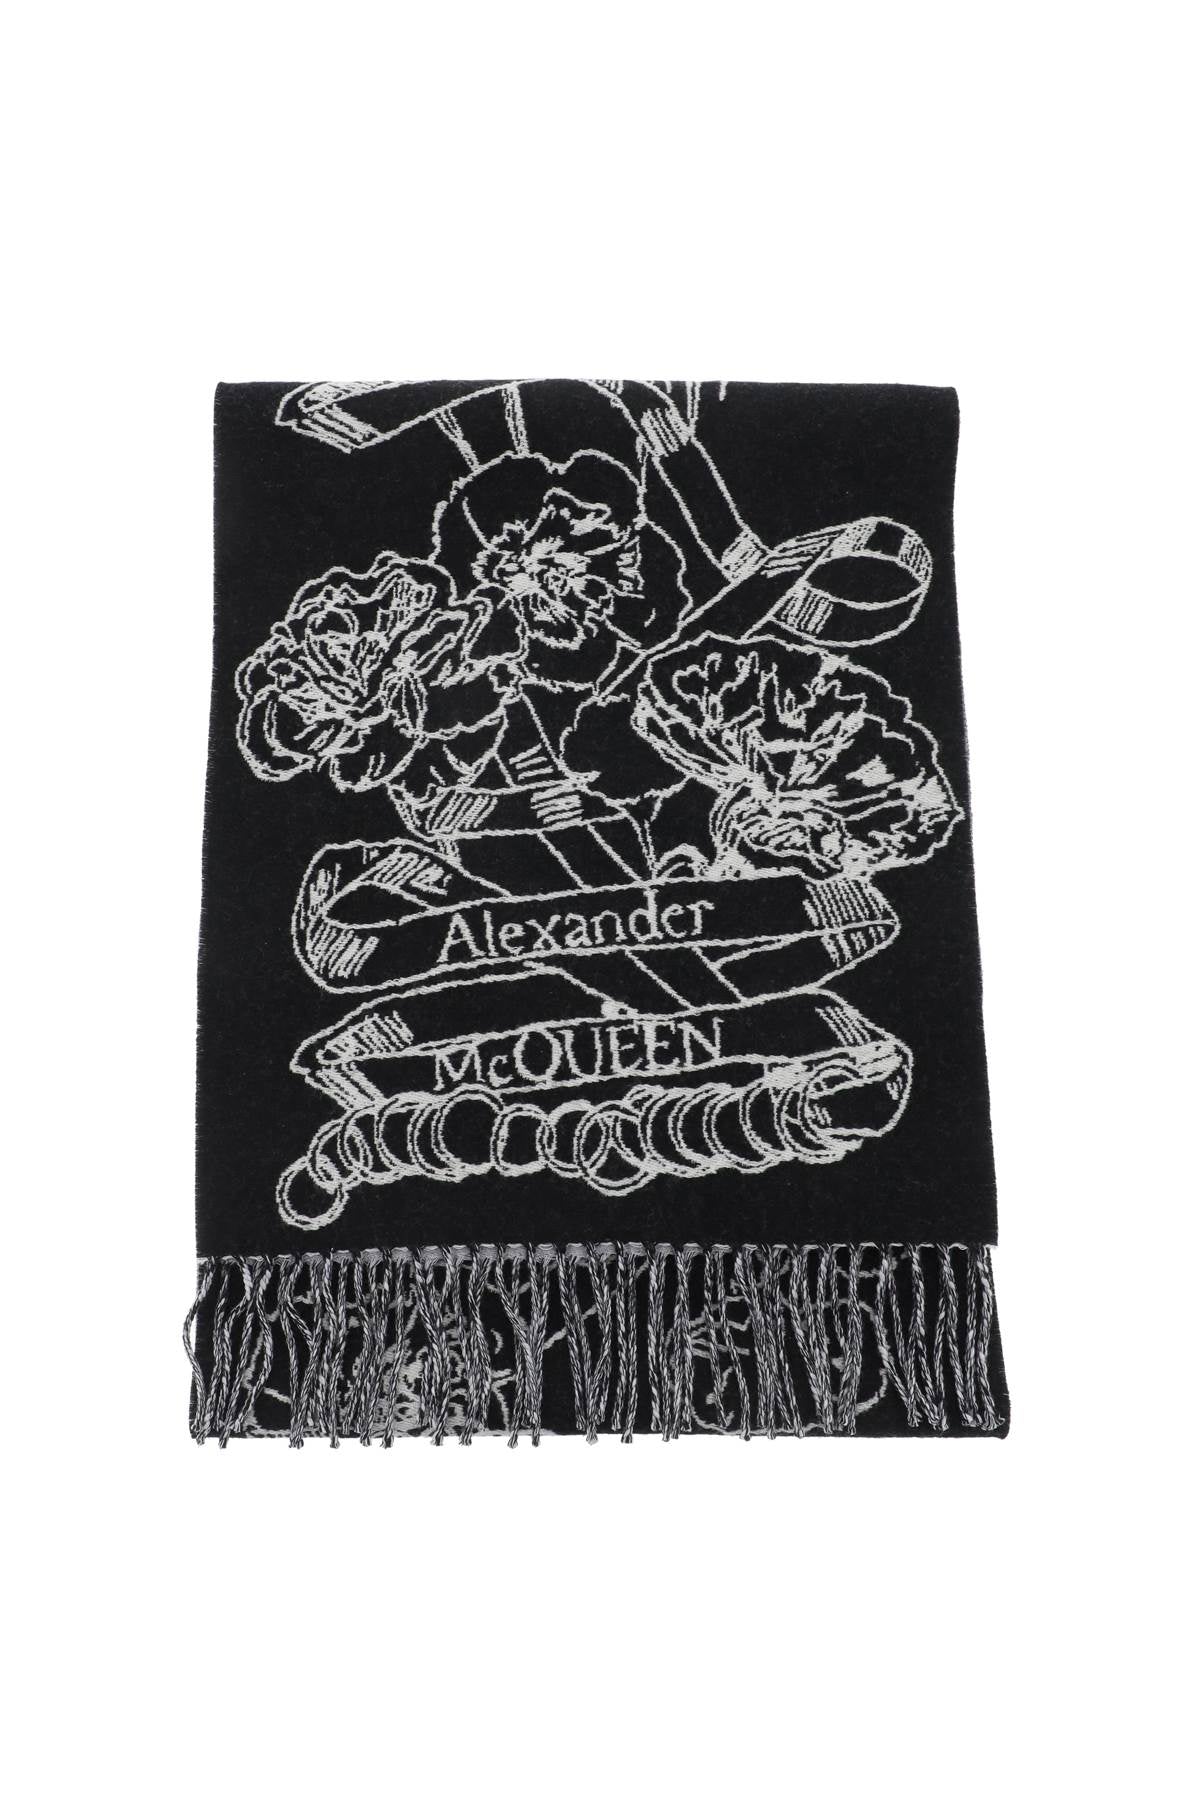 Alexander mcqueen wool reversibile scarf-0